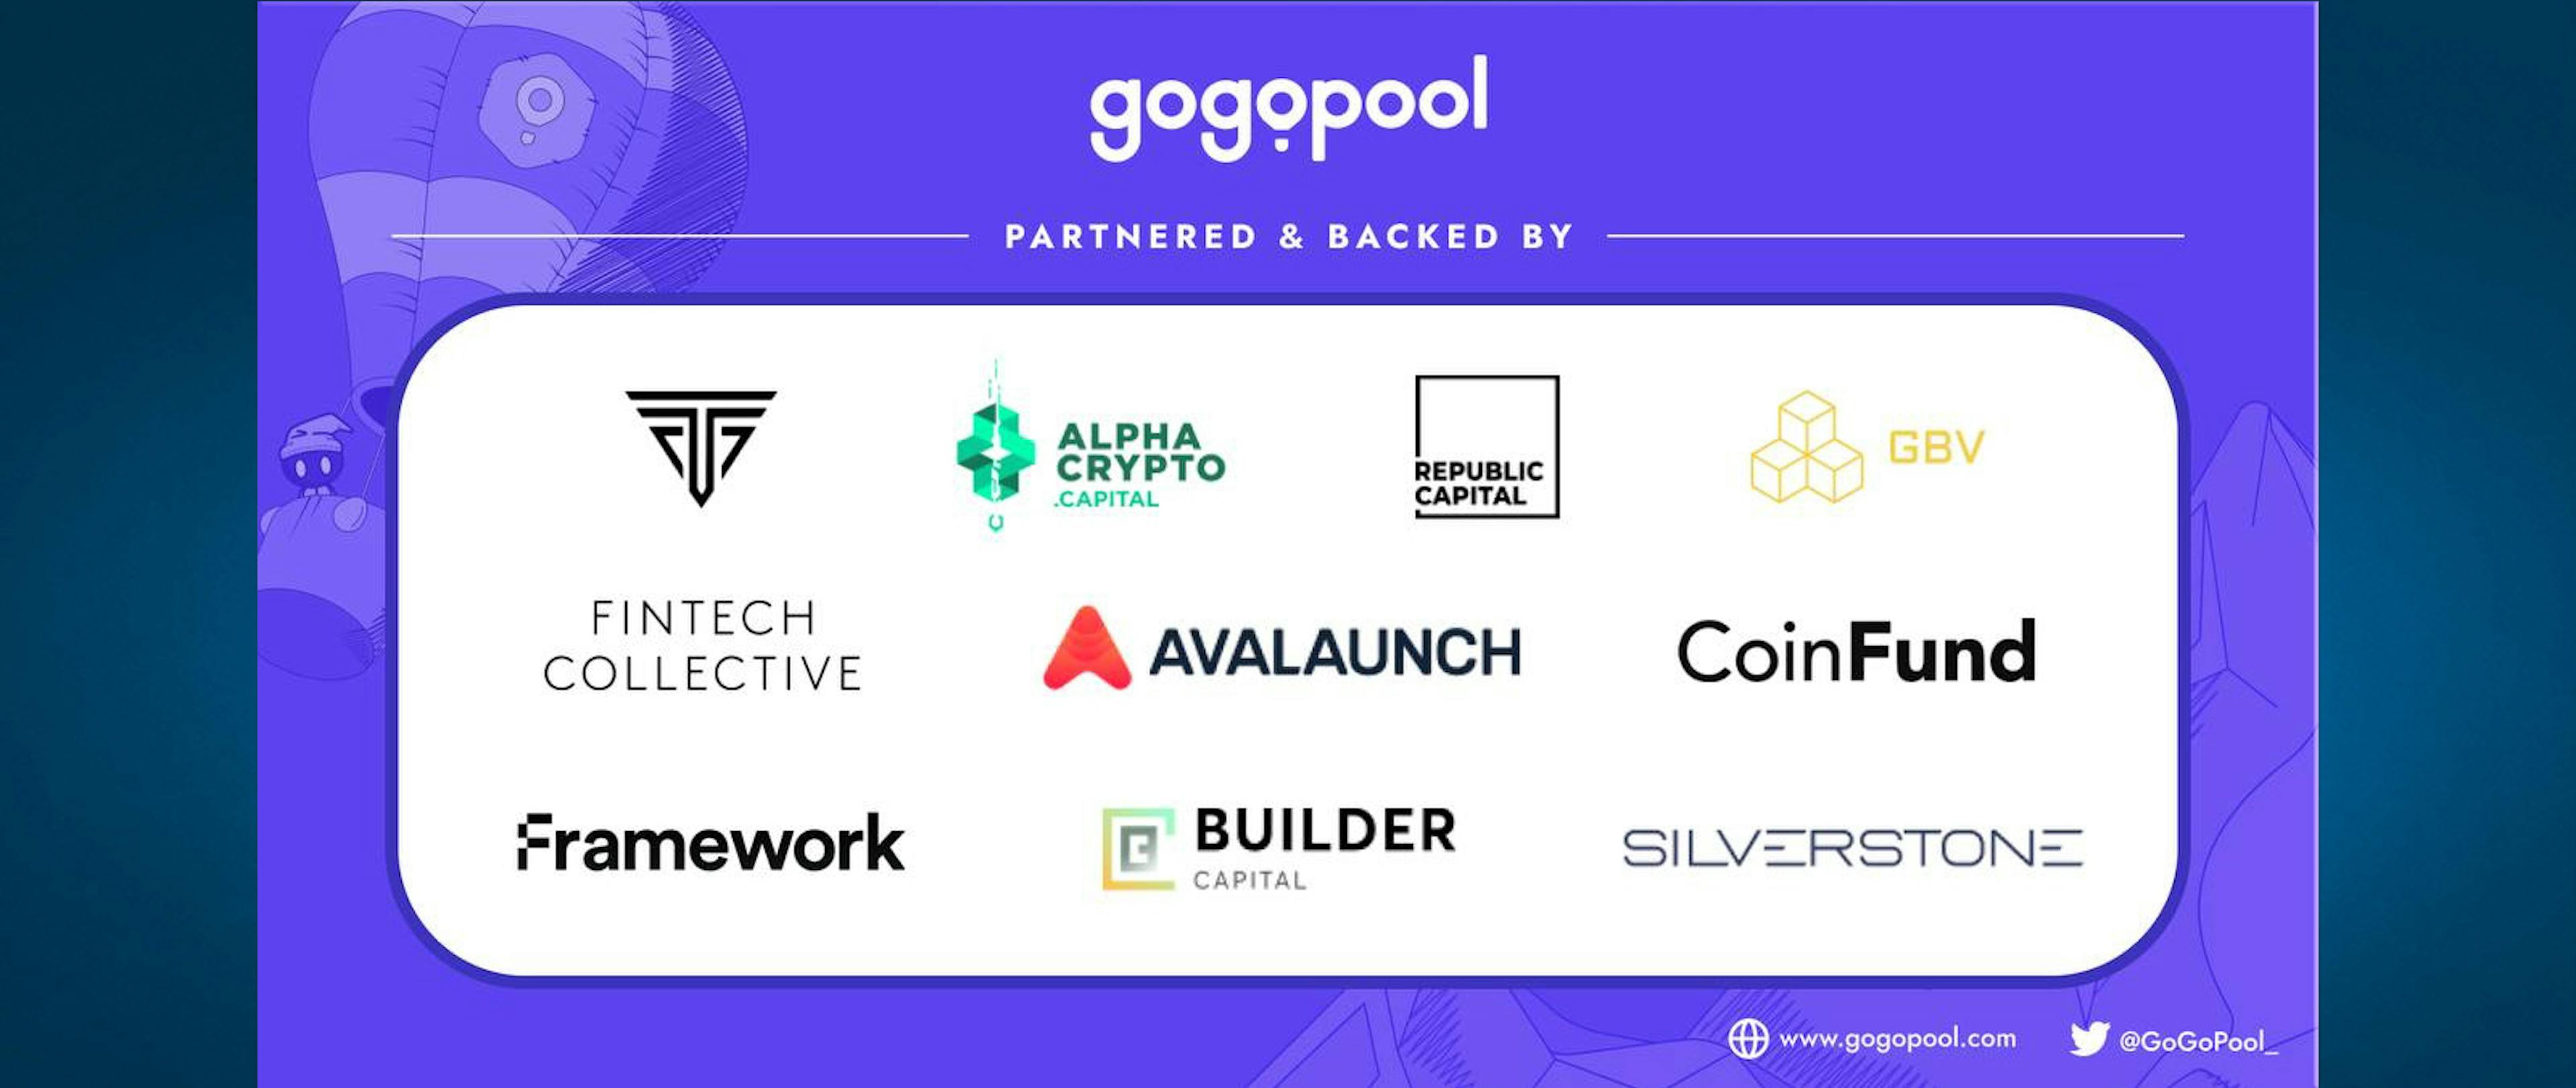 GoGoPool partners